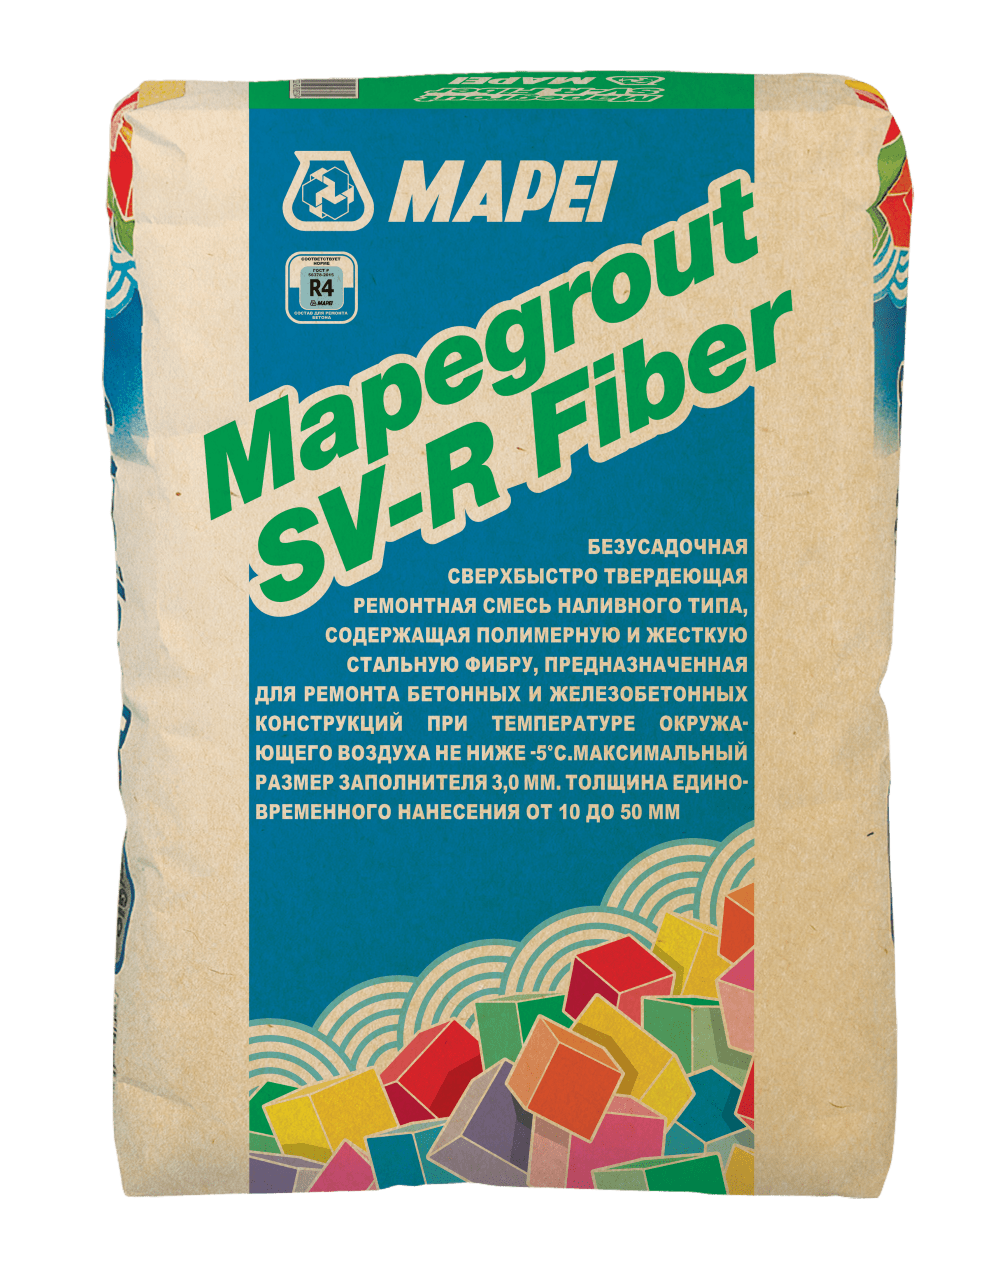 MAPEGROUT SV-R FIBER - 1